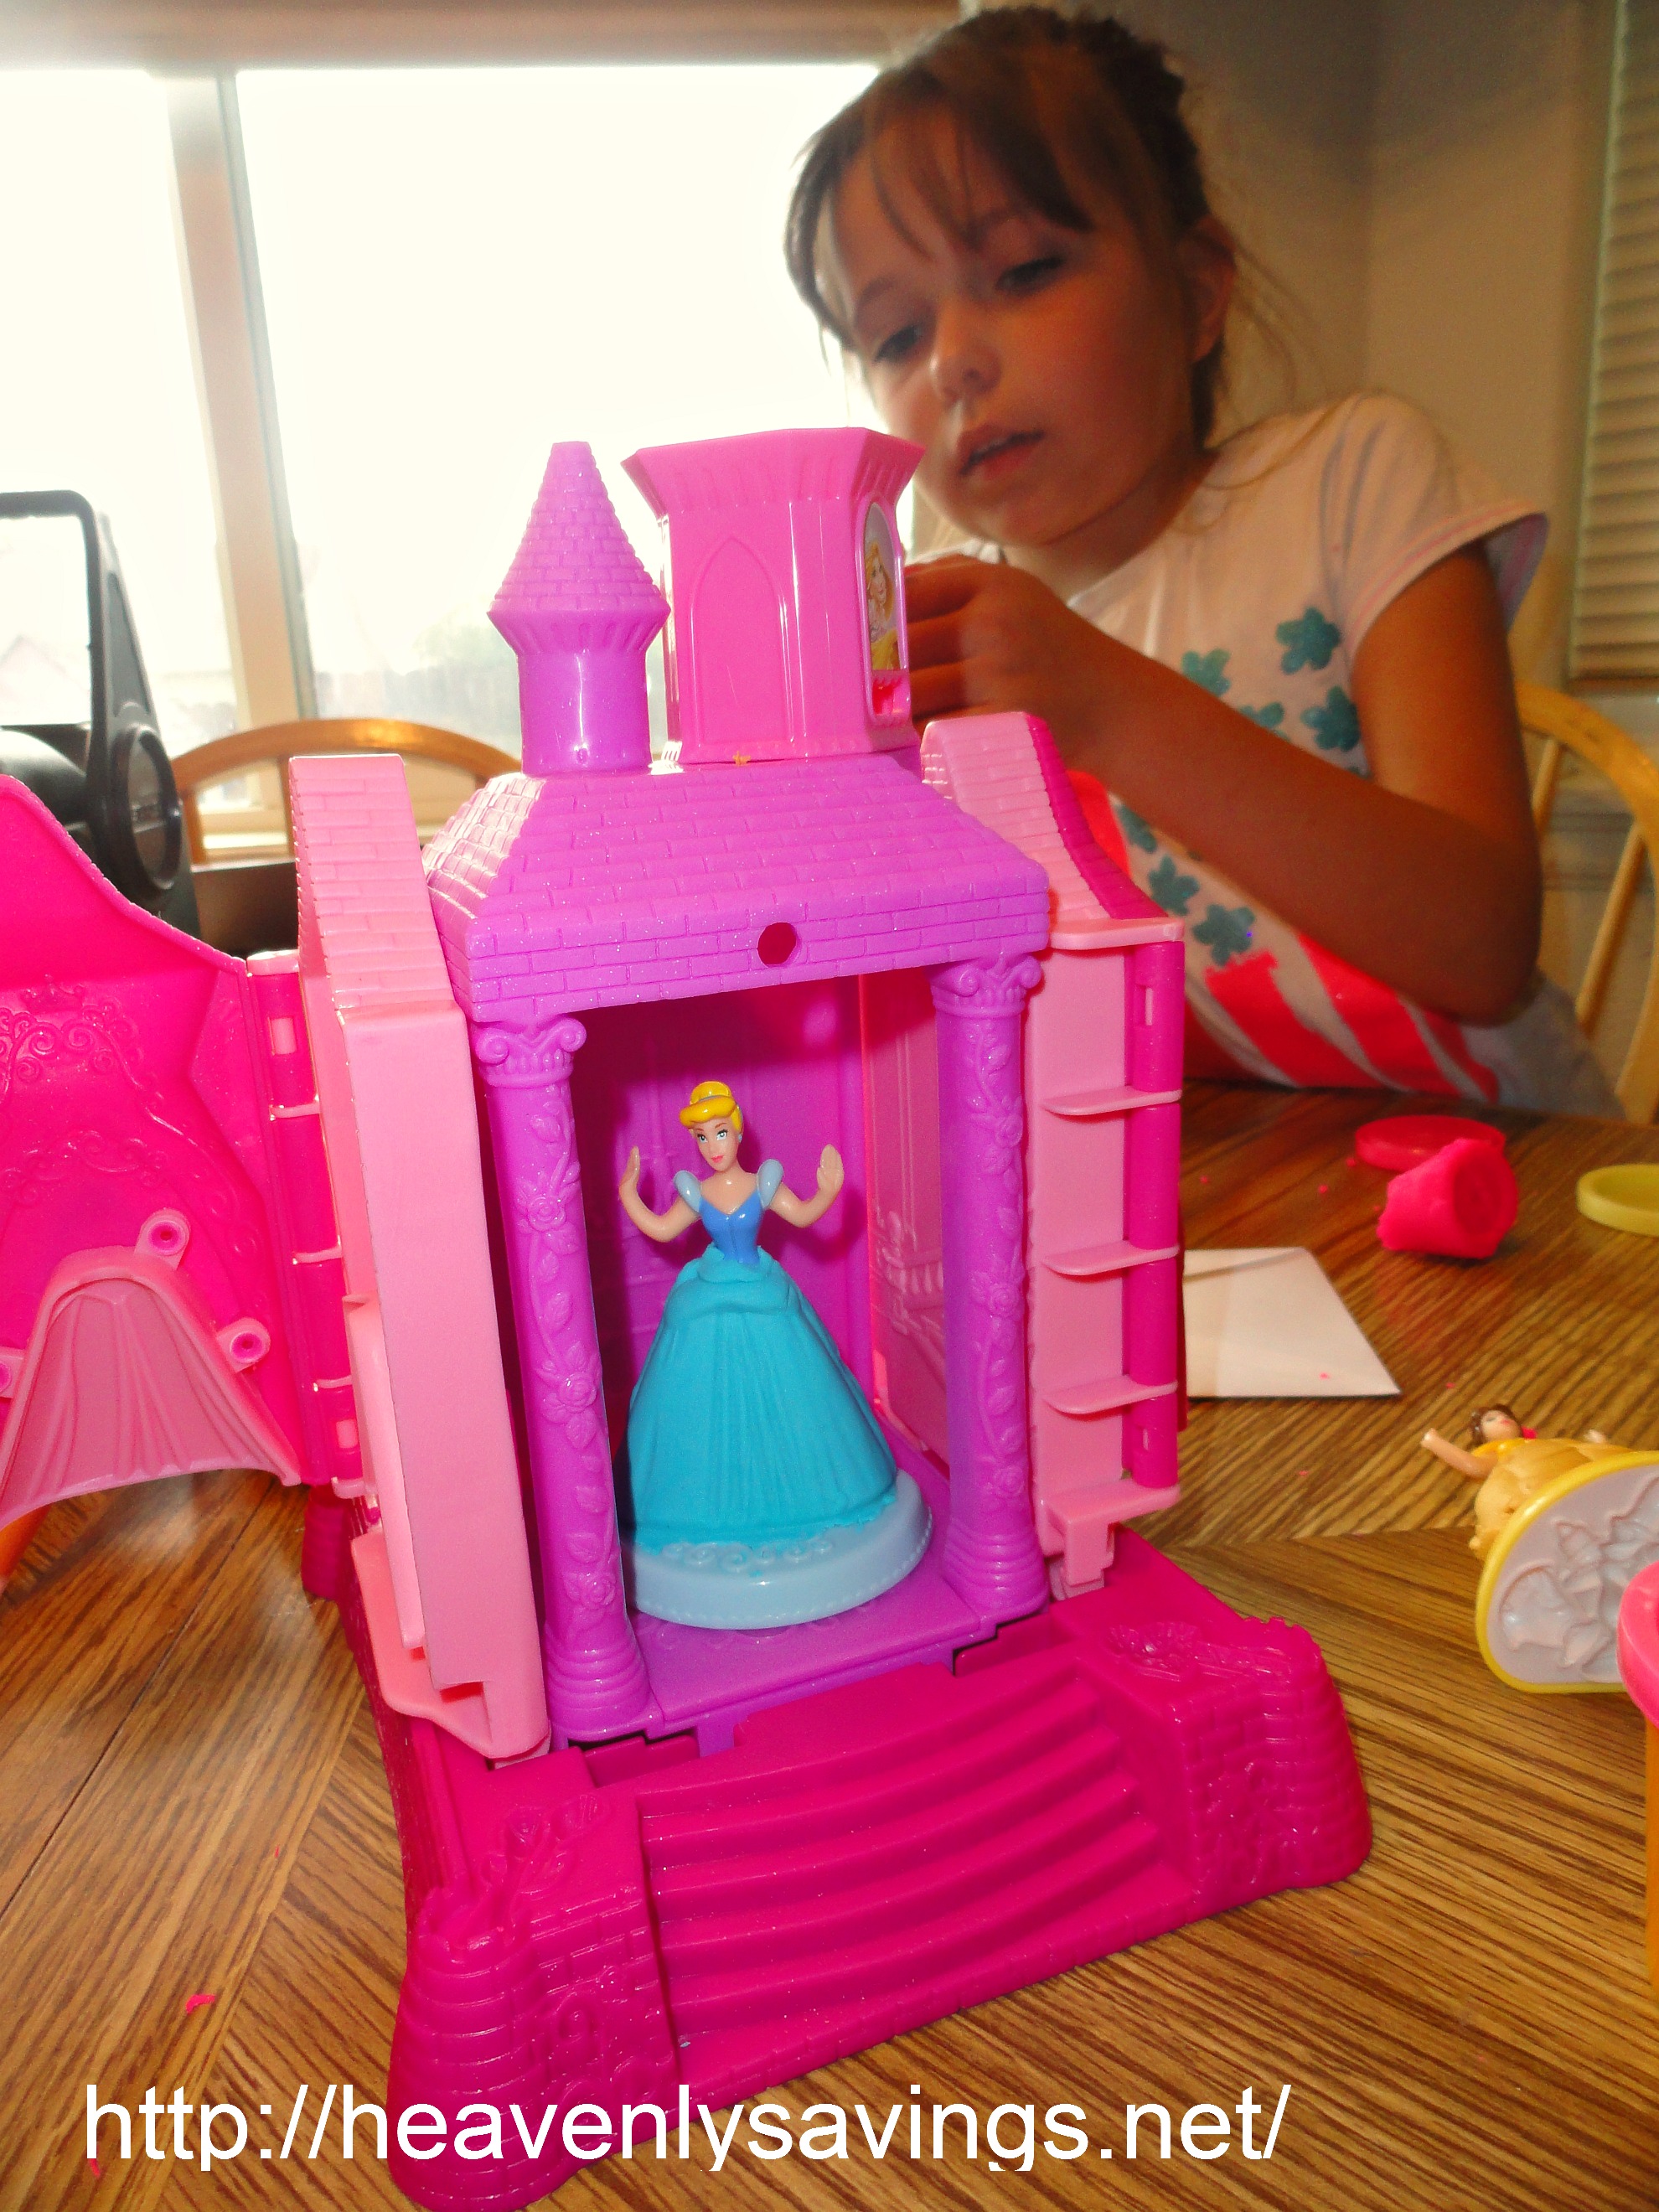 Play-Doh Prettiest Princess Castle